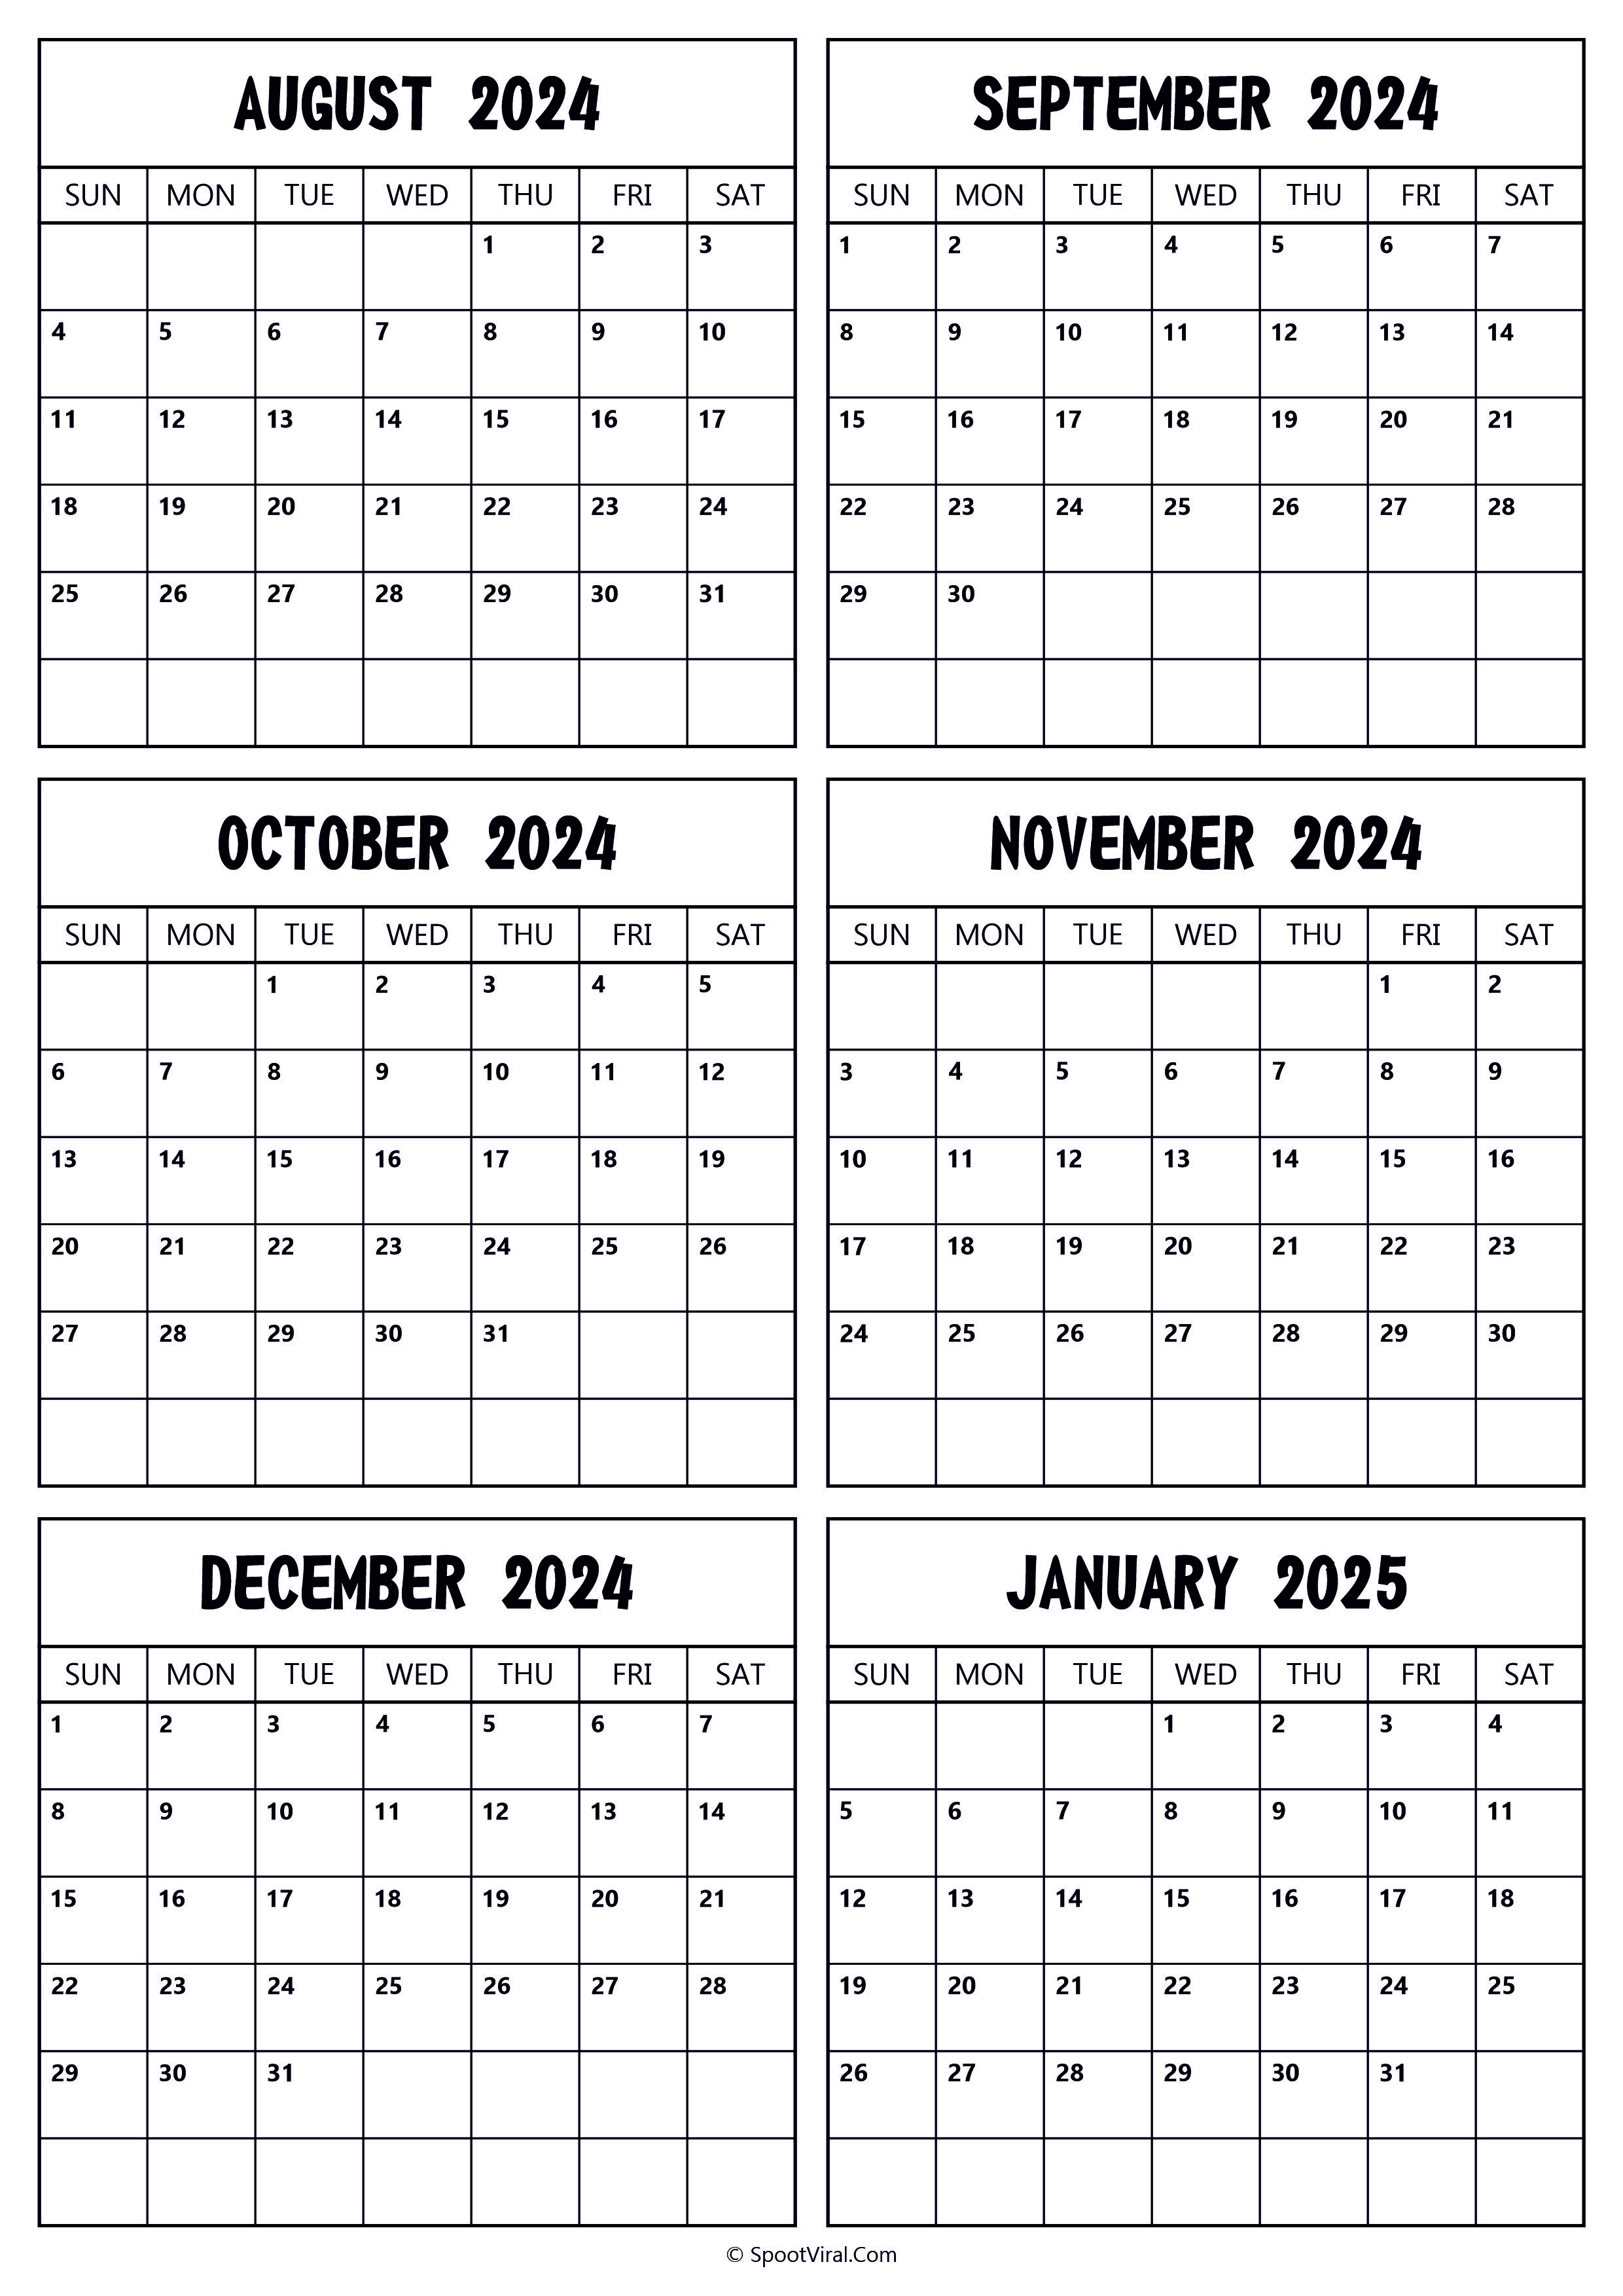 2024 August to 2025 January Calendar